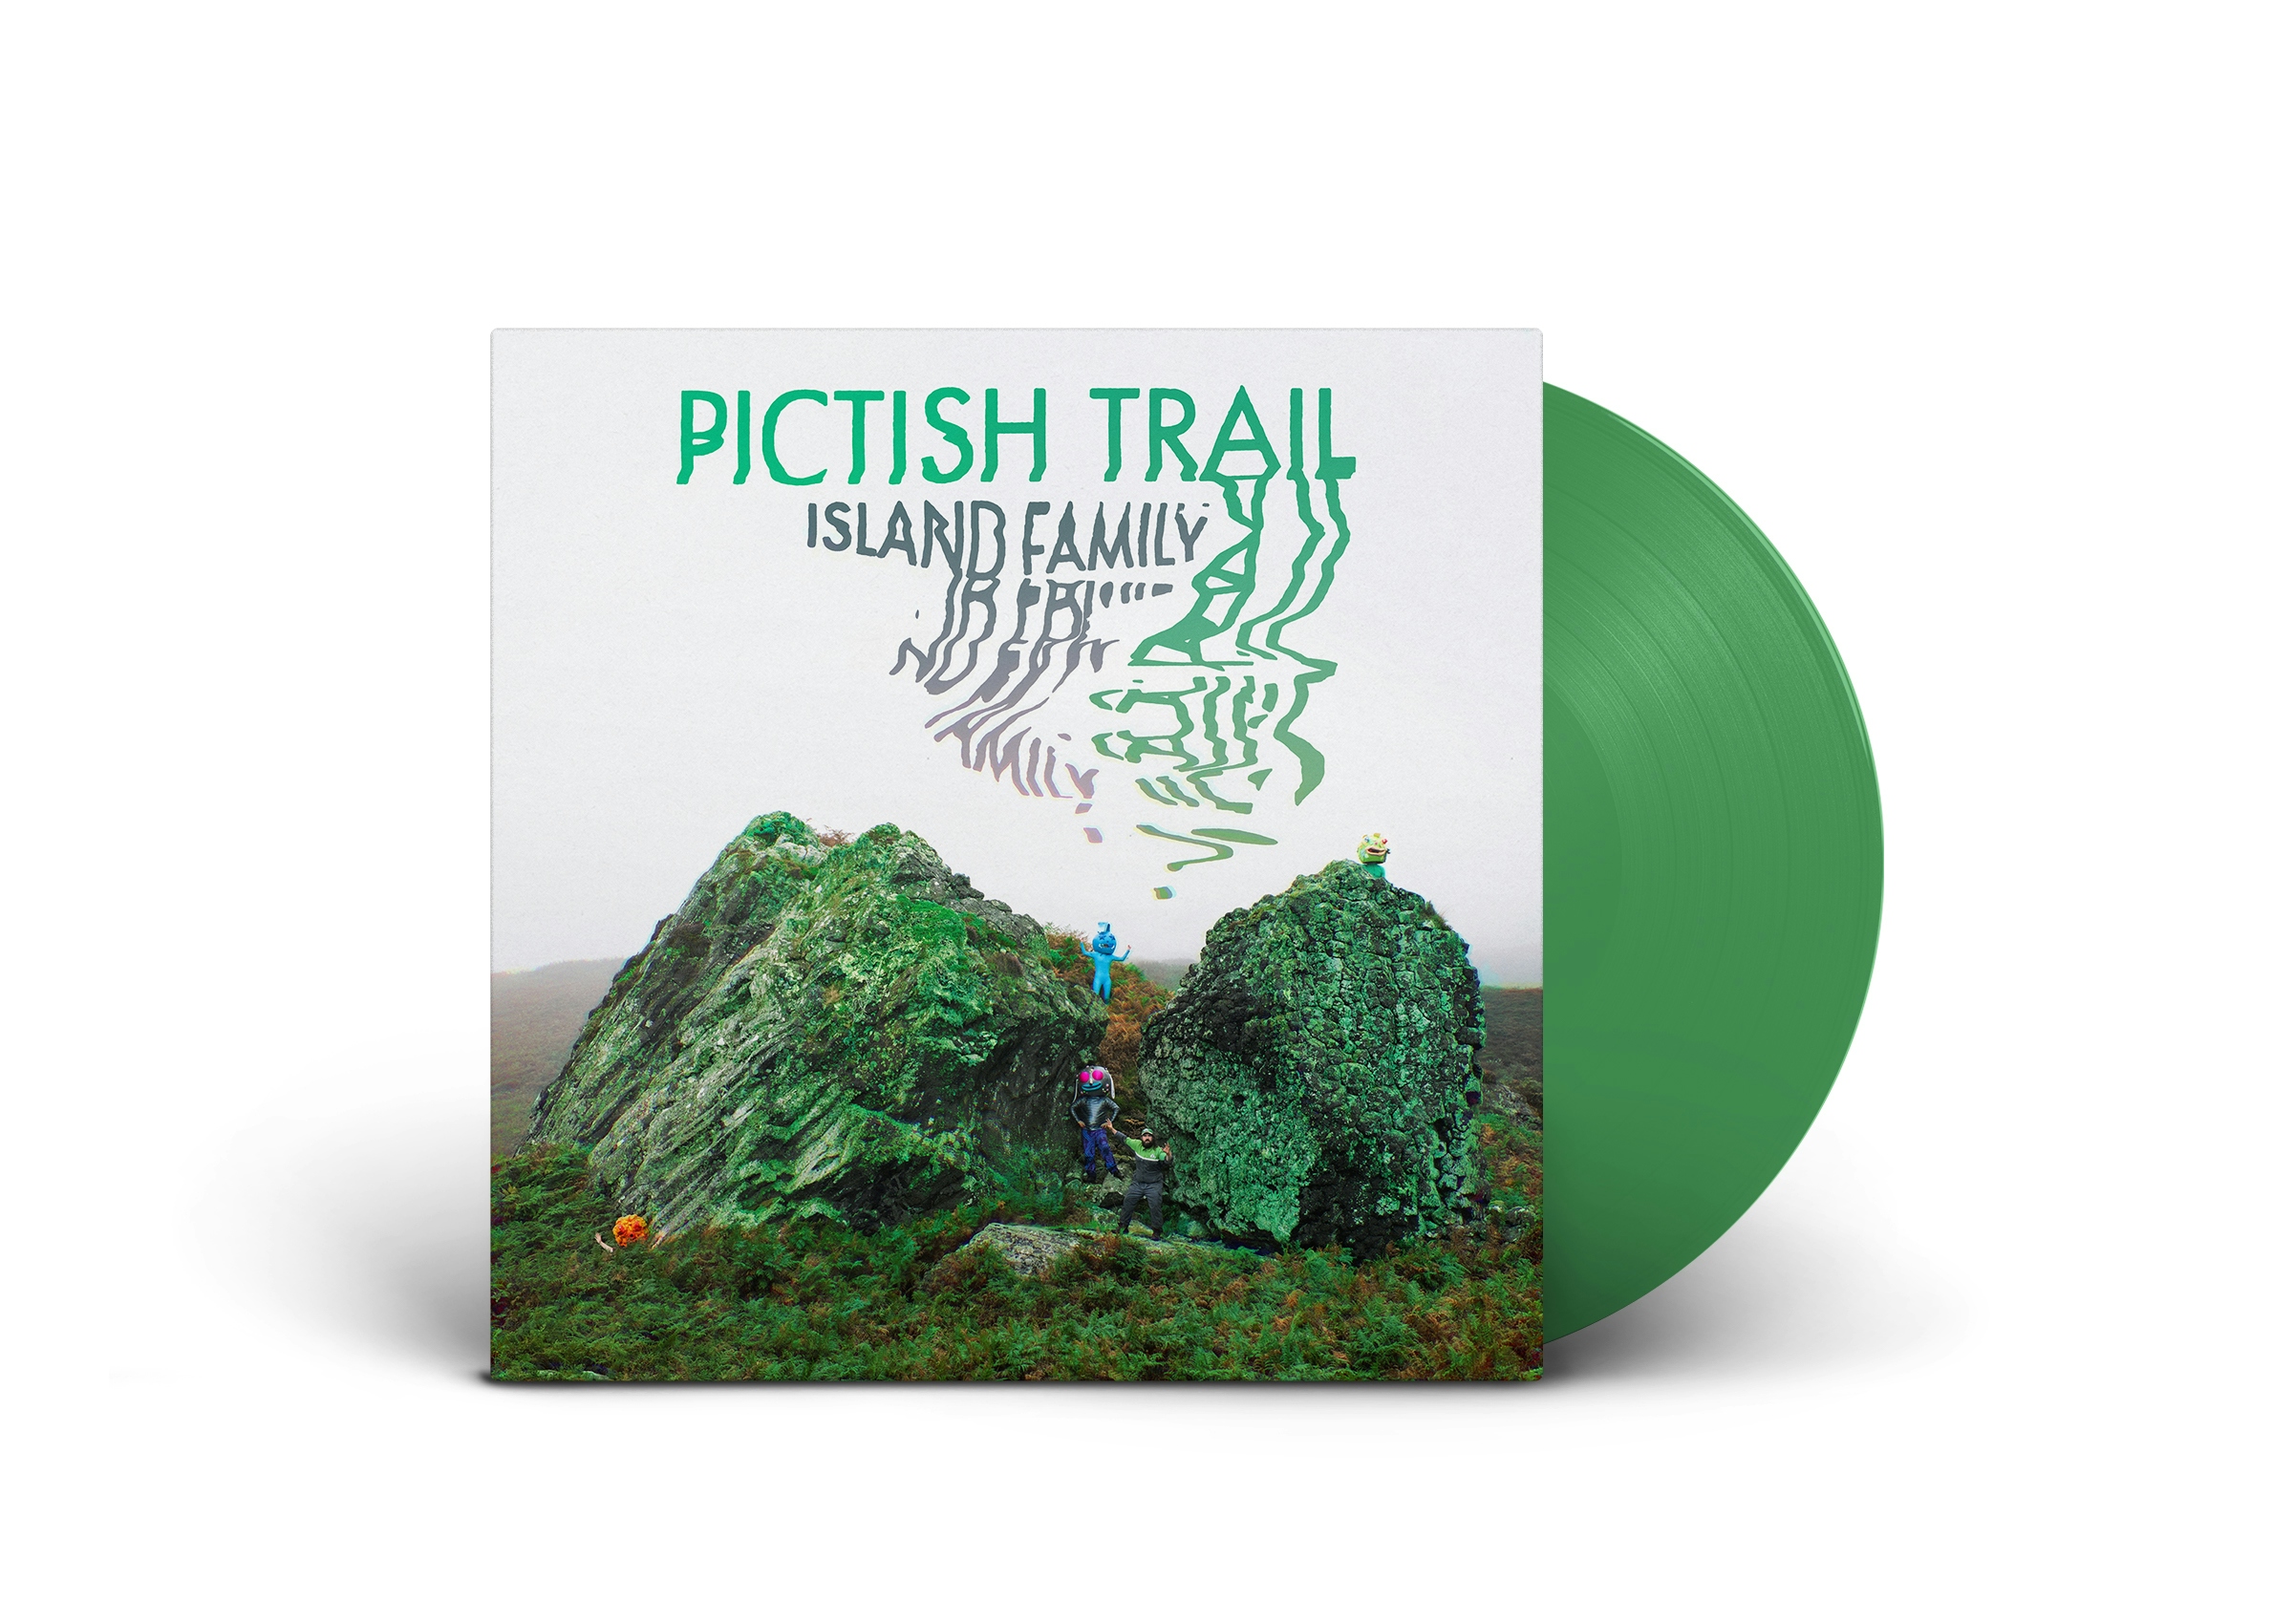 Album artwork for Album artwork for Island Family by The Pictish Trail by Island Family - The Pictish Trail